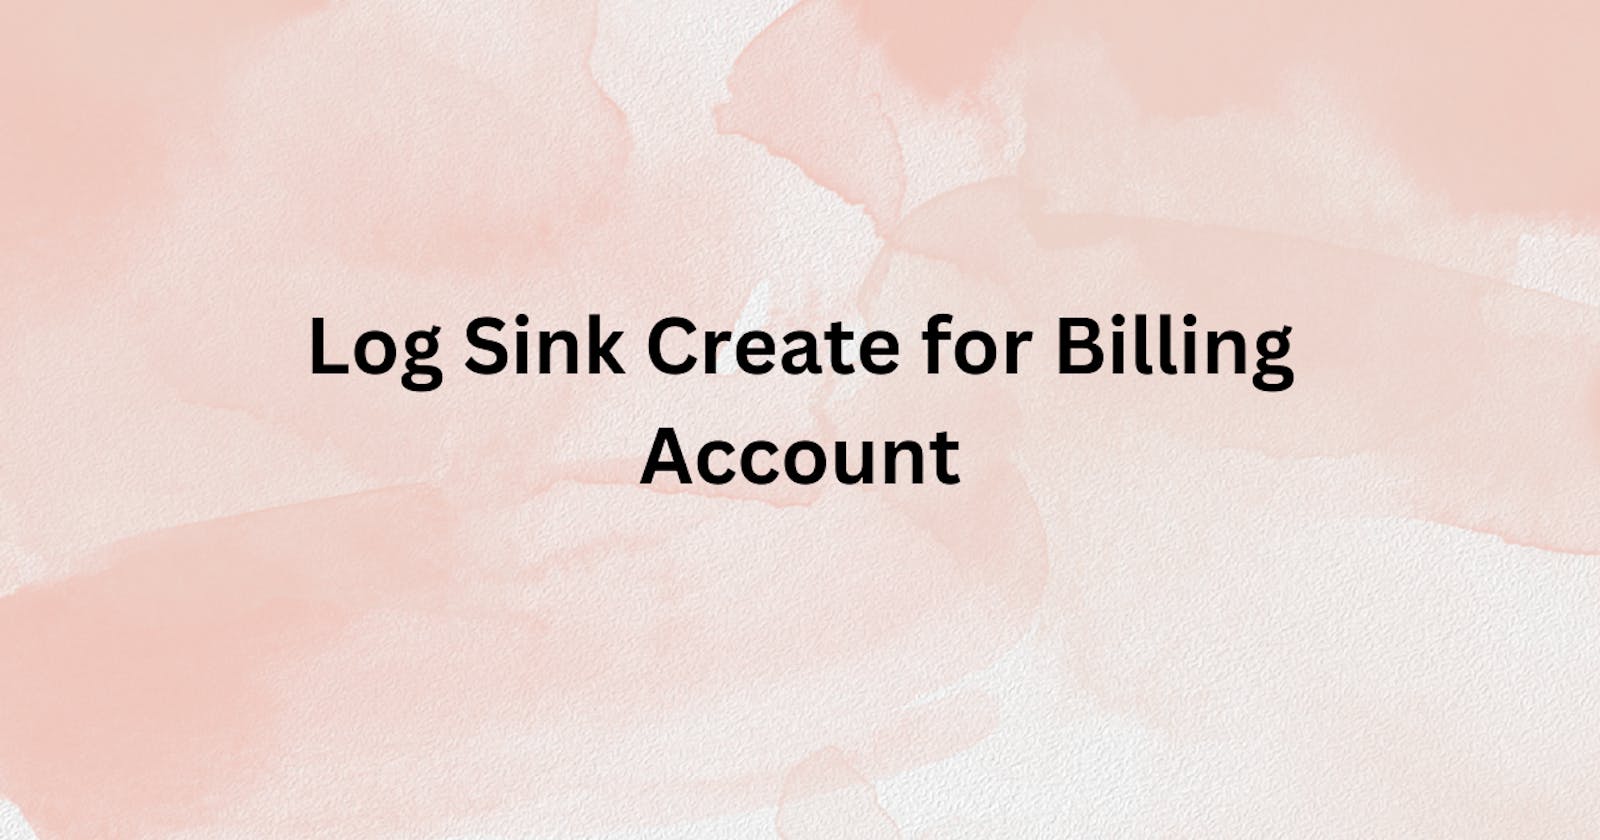 Log Sink Create for Billing Account